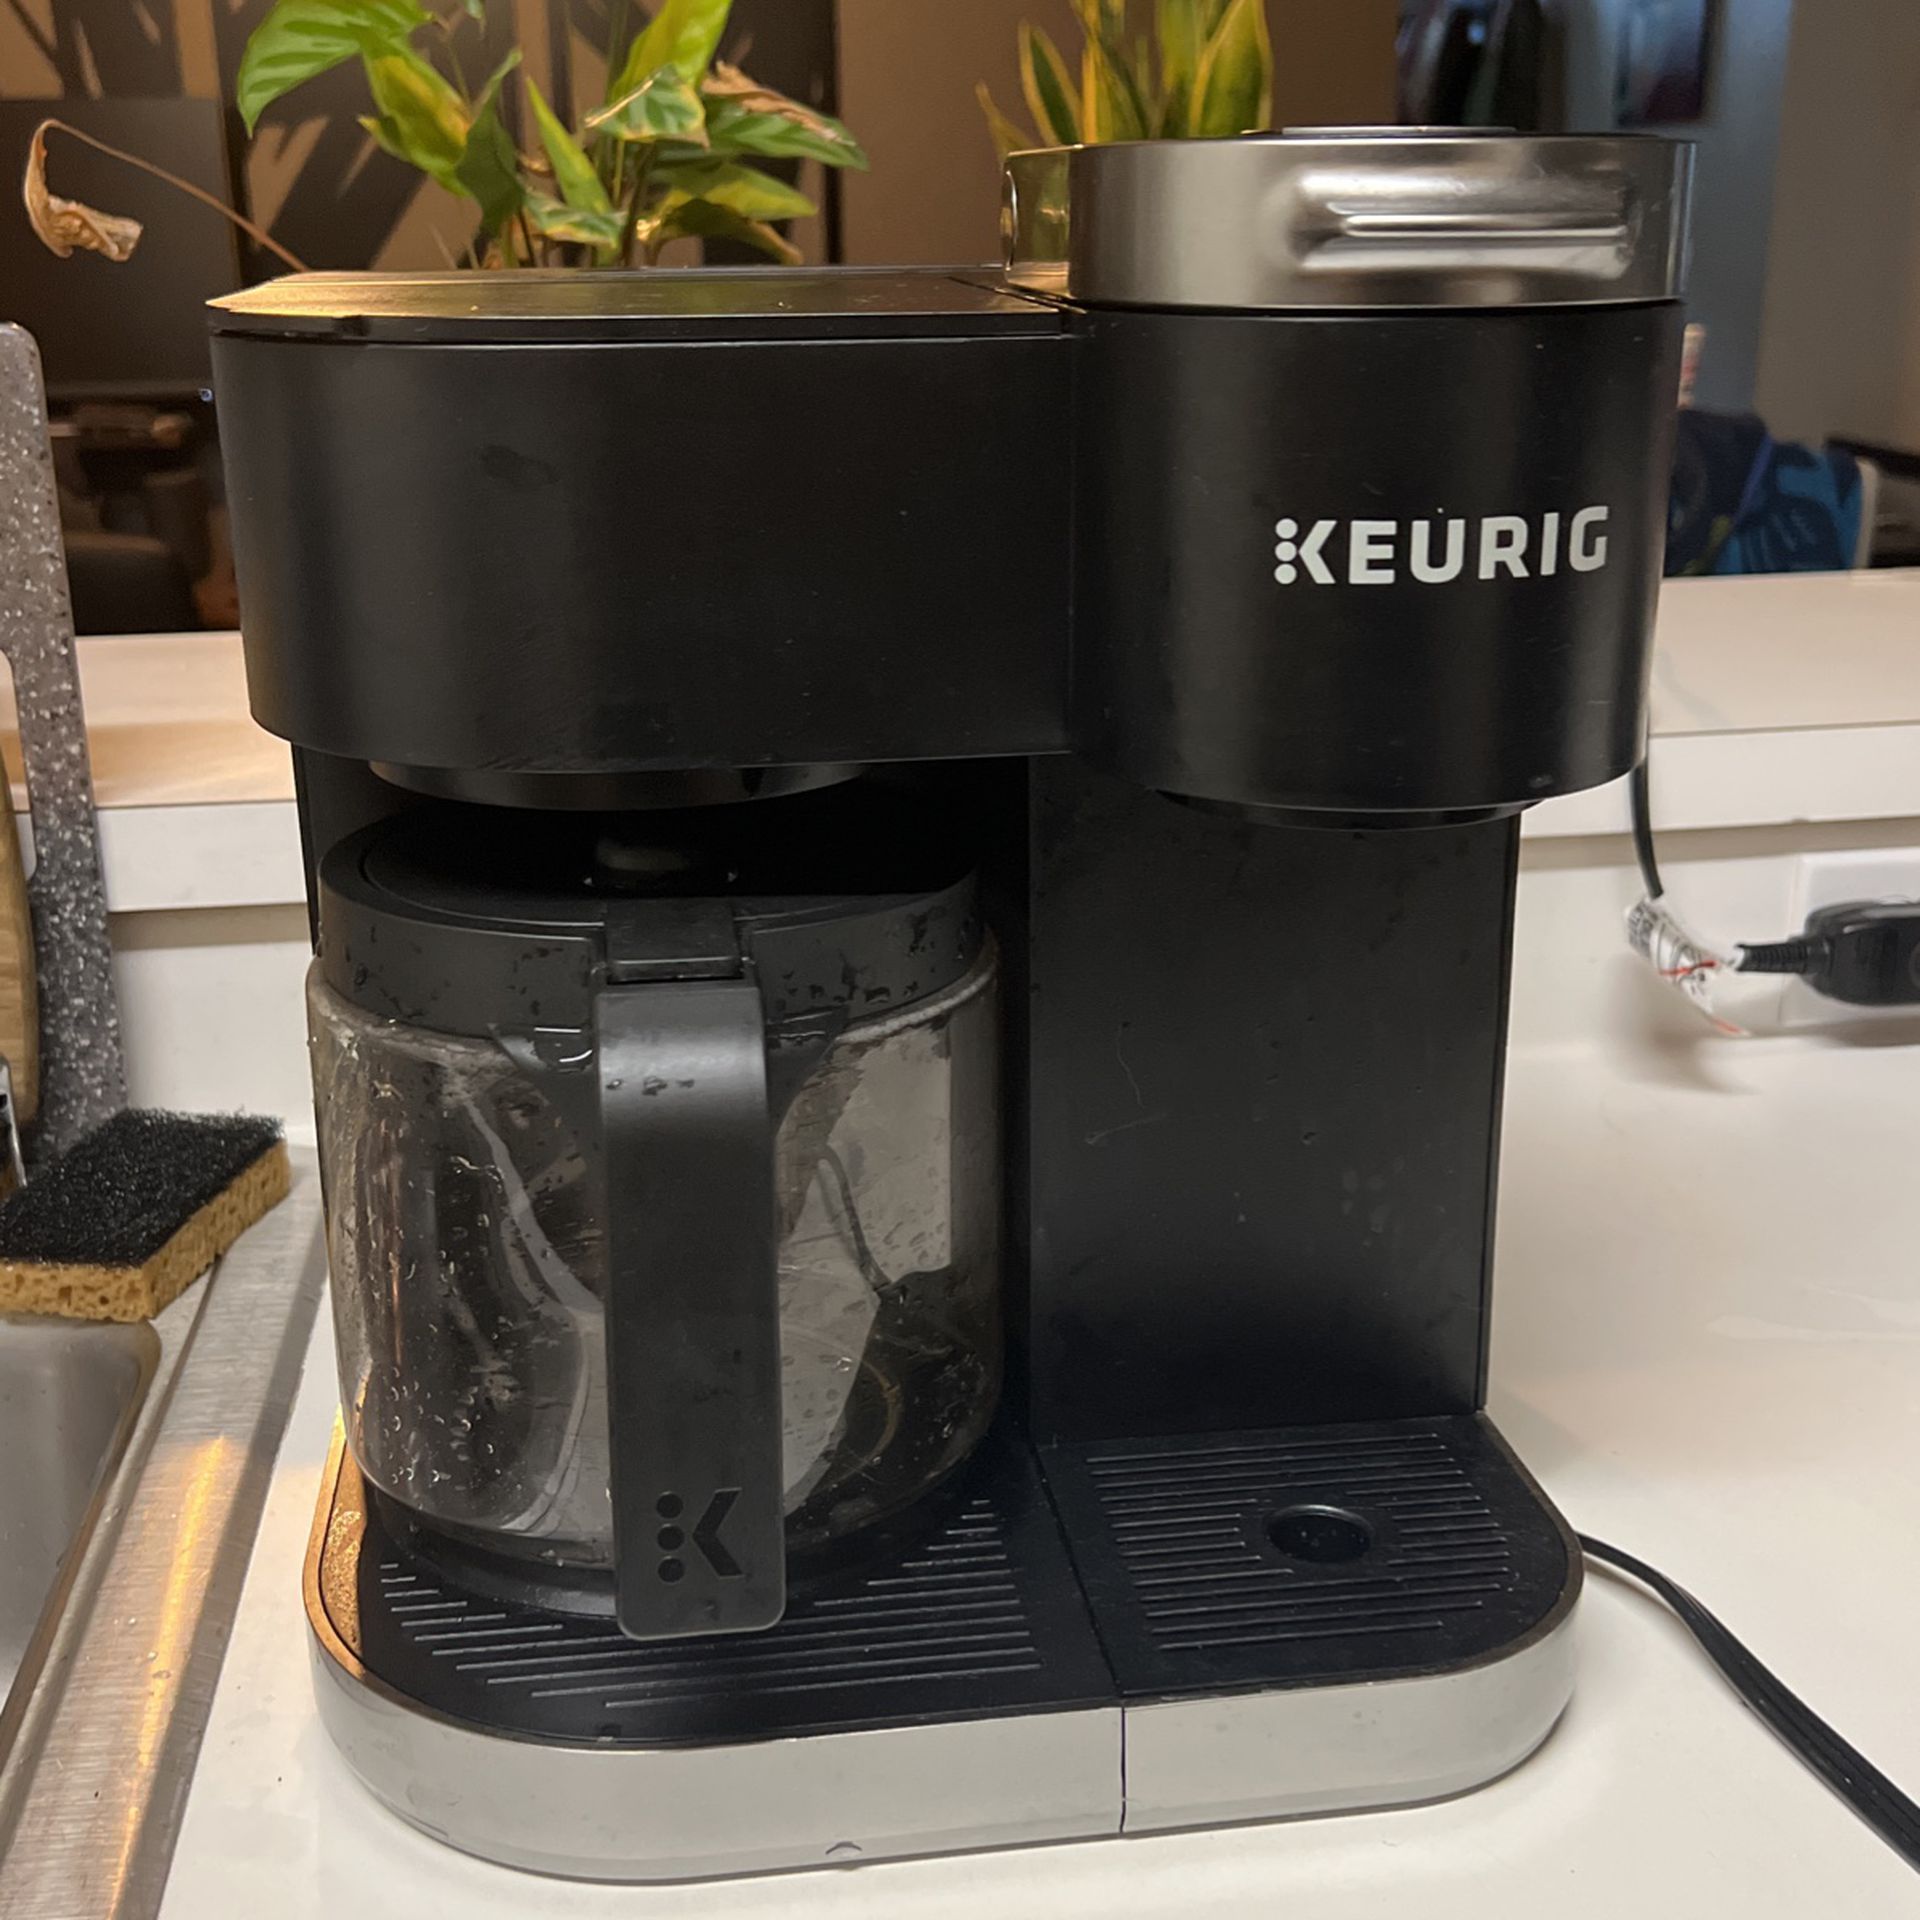 Keurig Duo Coffee Maker for Sale in San Jose, CA - OfferUp